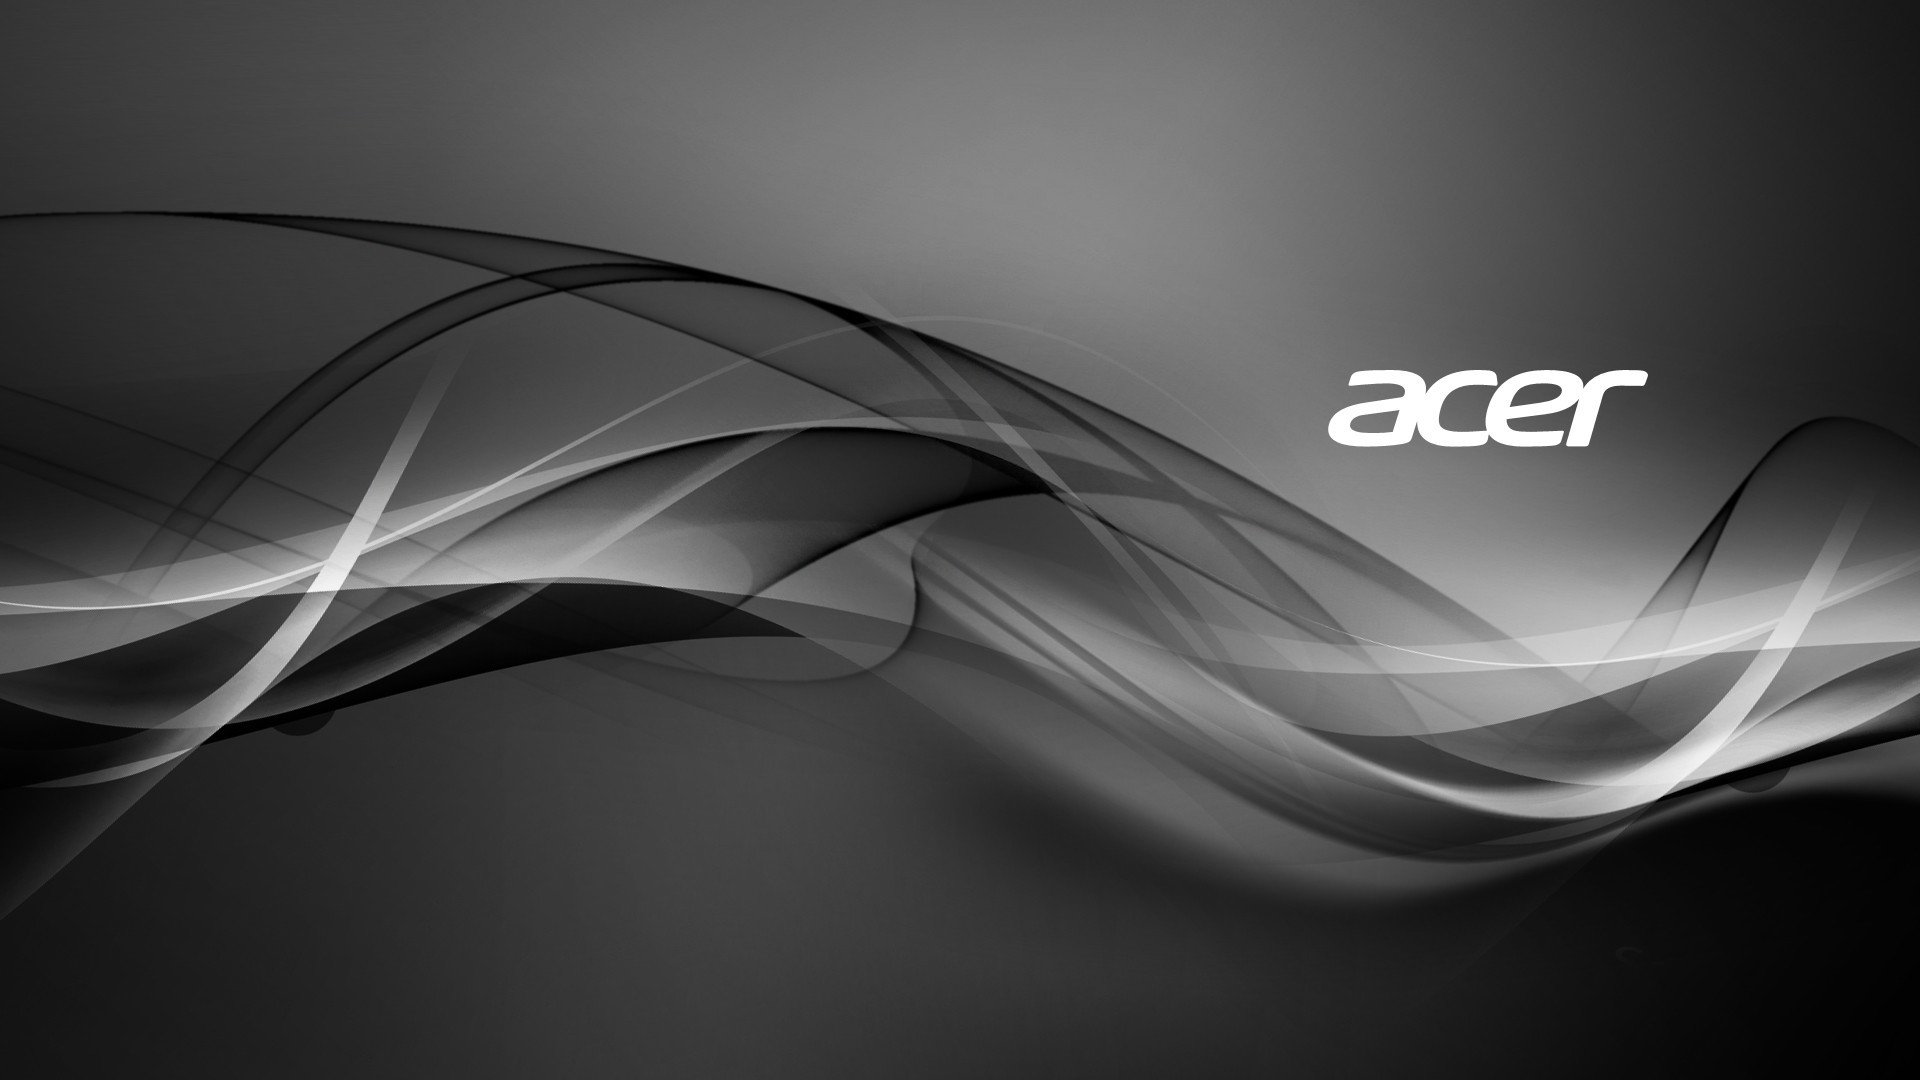 1920x1080 Acer Aspire black and white wallpaper  (1080p) - Wallpaper .